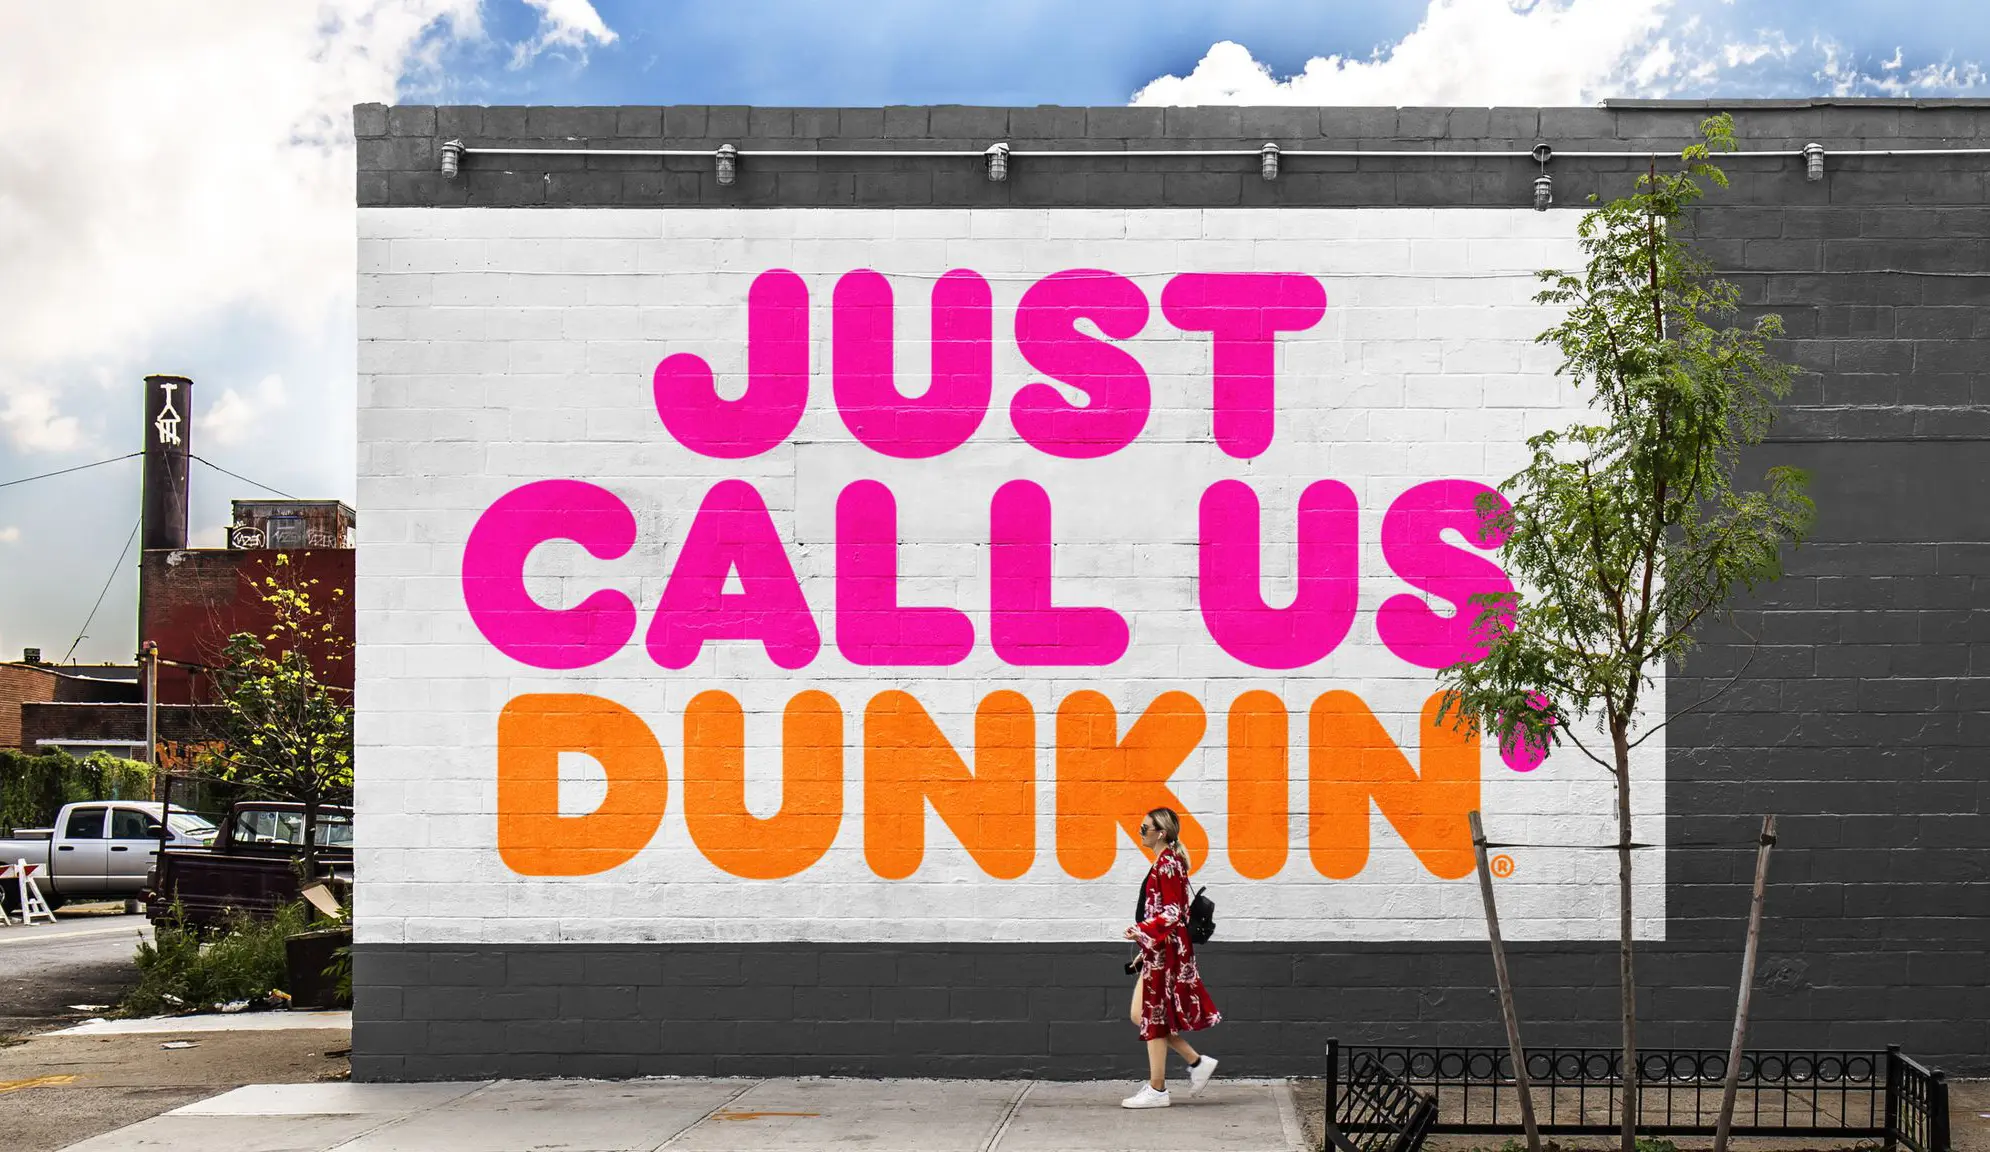 Dunkin’ Donuts se queda en Dunkin’ a secas.